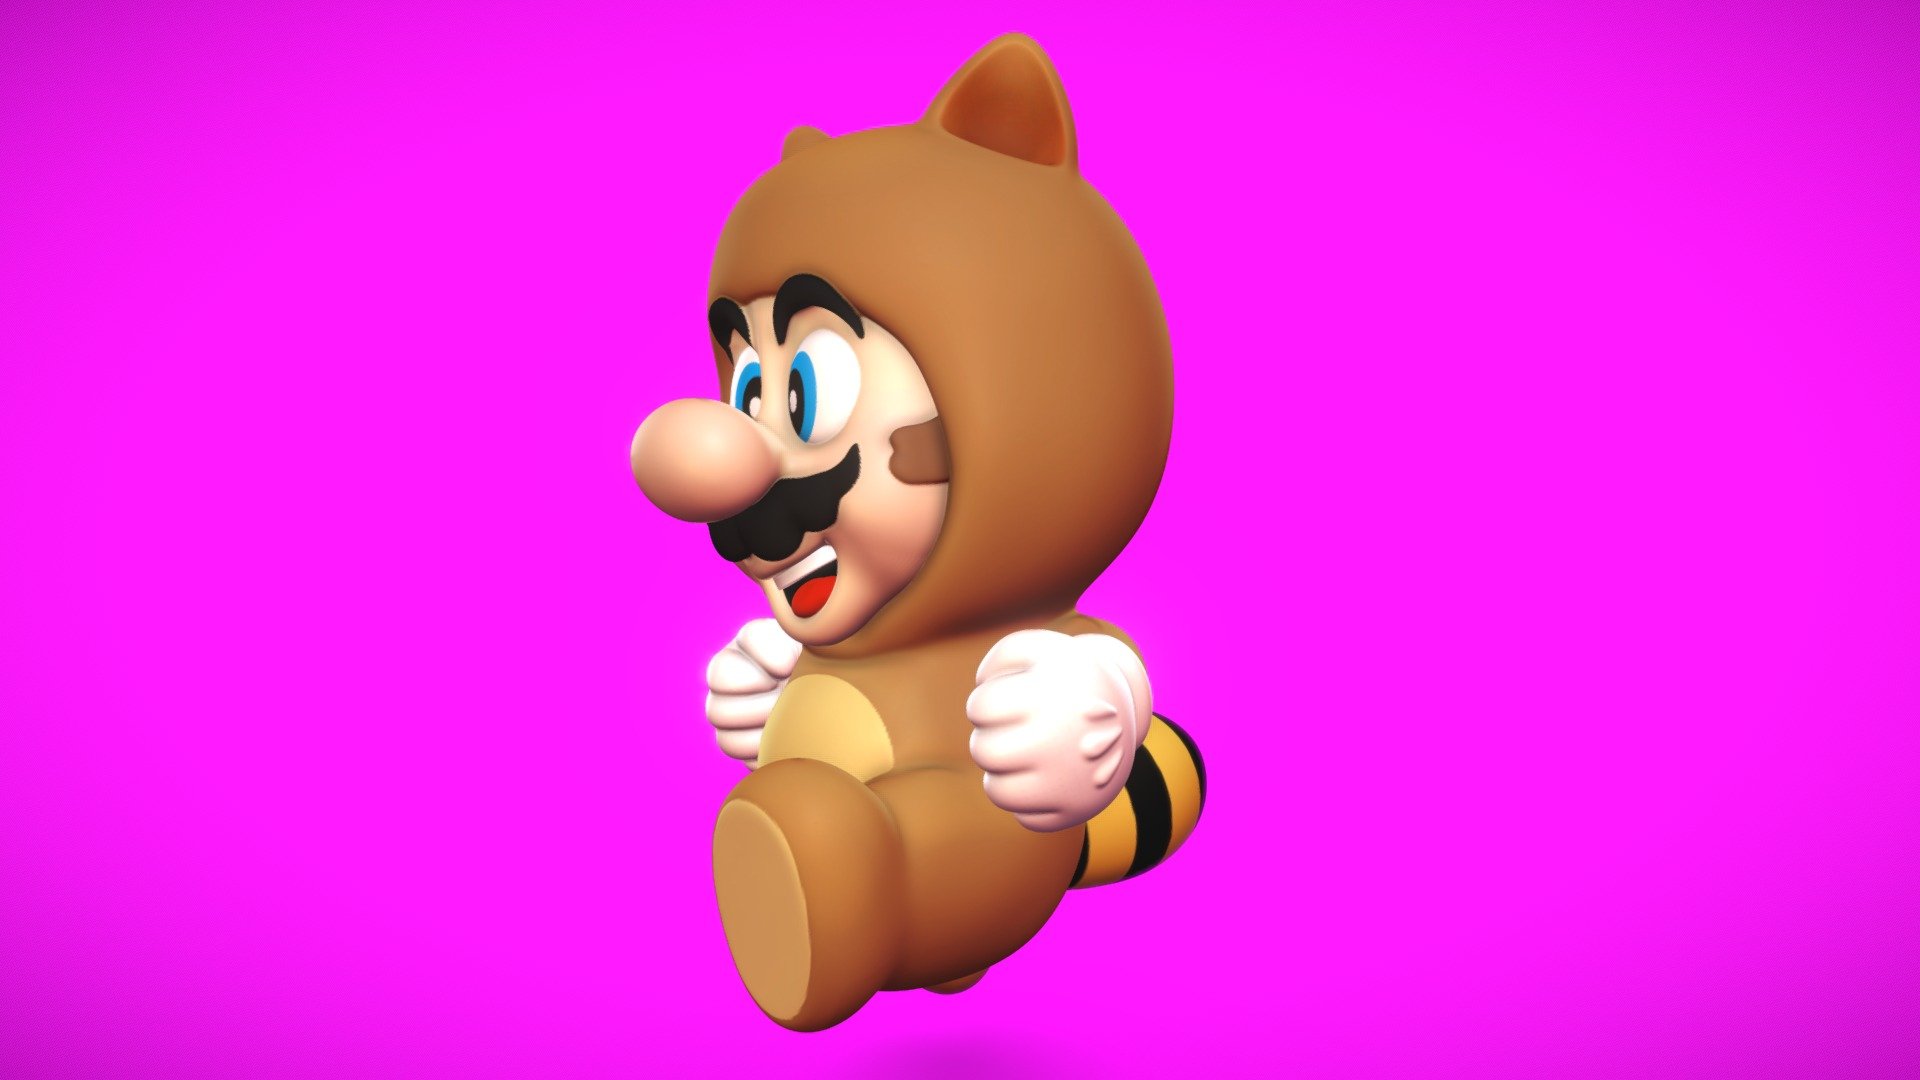 Mario Raccoon / Tanooki Mario Royalty Free 3D model by rendermodel [0dace2e]